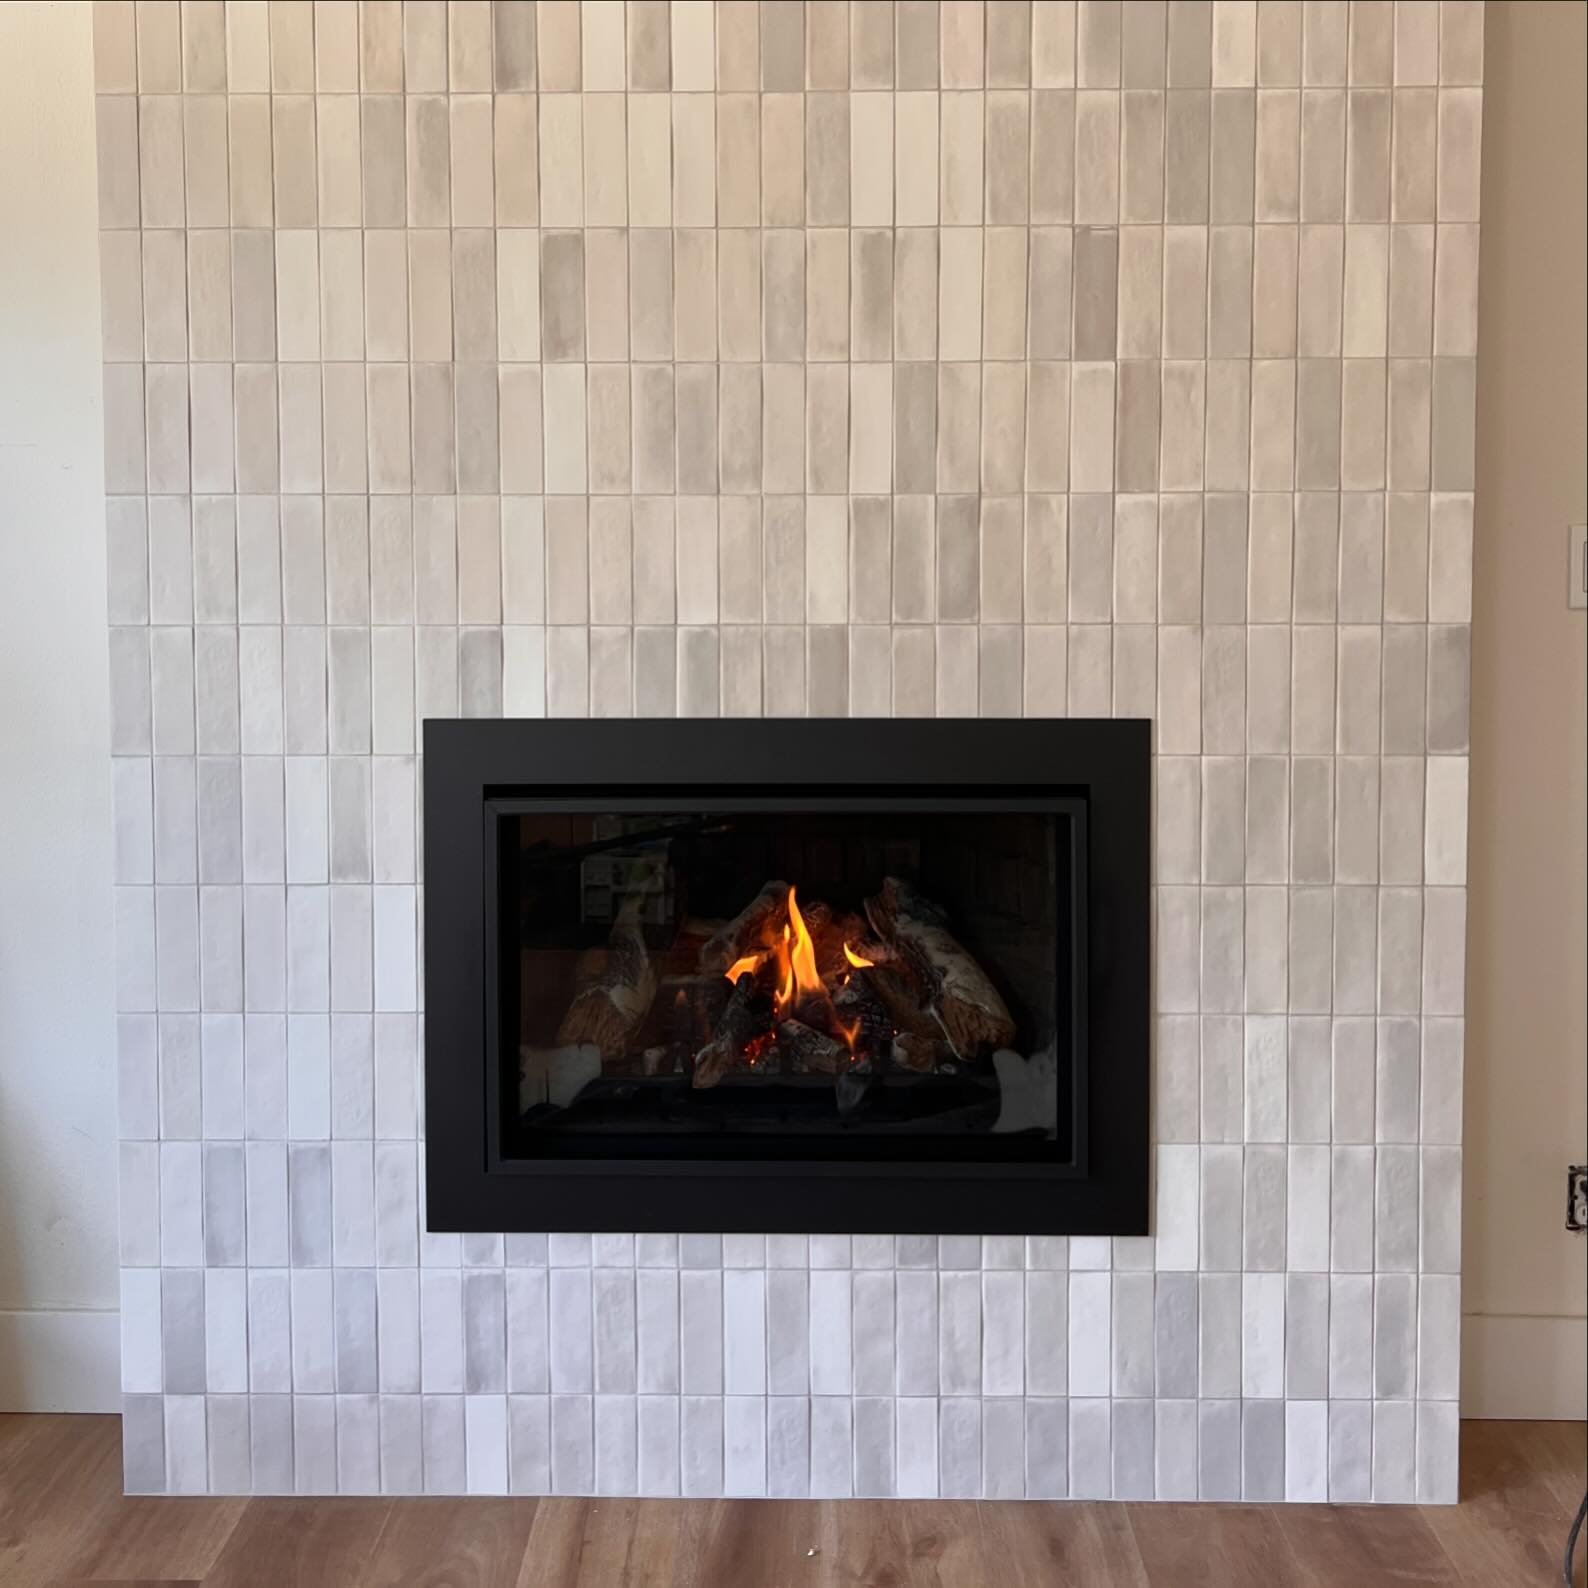 @envirofireplaces E33i w/ Custom 4 Sided Surround, Graphite Grey Brick Panels and Birch Logs

#remodeling #gasinsert #fireplace #nogasban